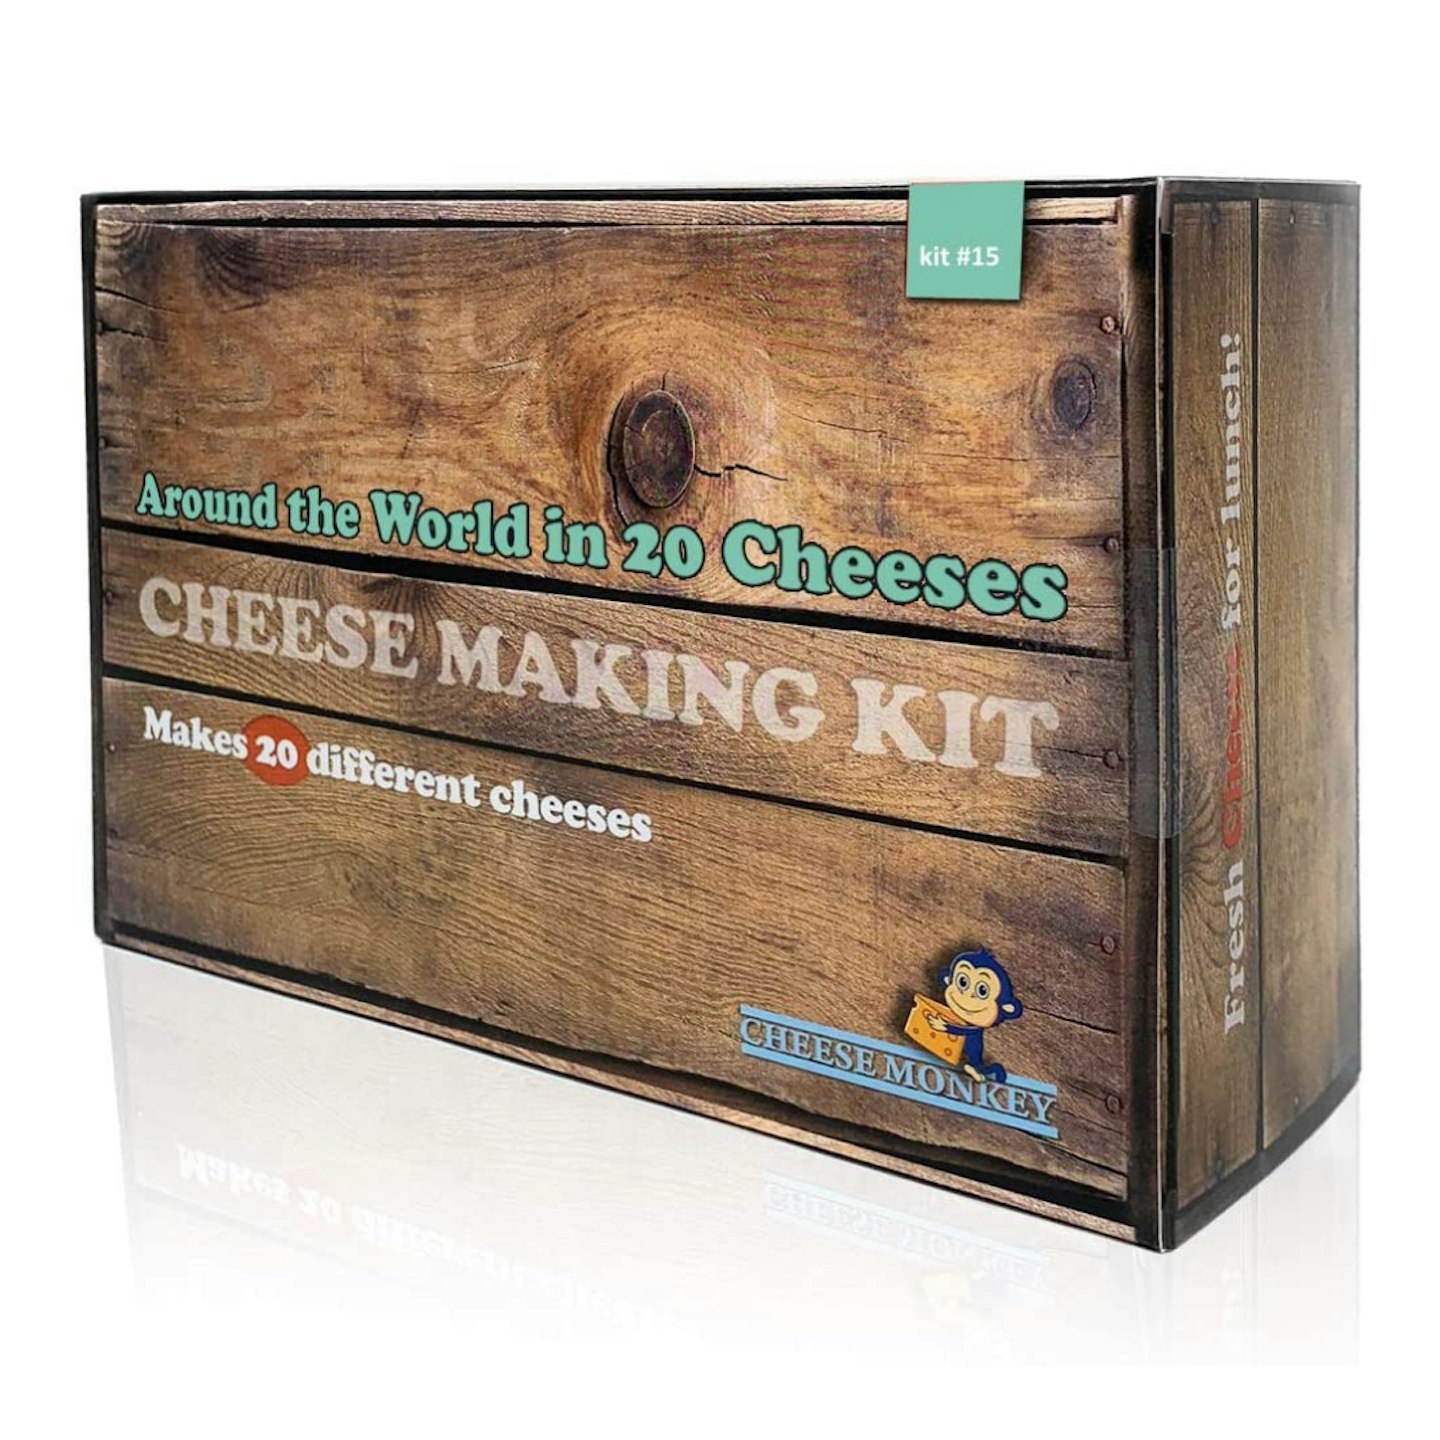 Cheese Making Kit - Around The World in 20 Cheeses